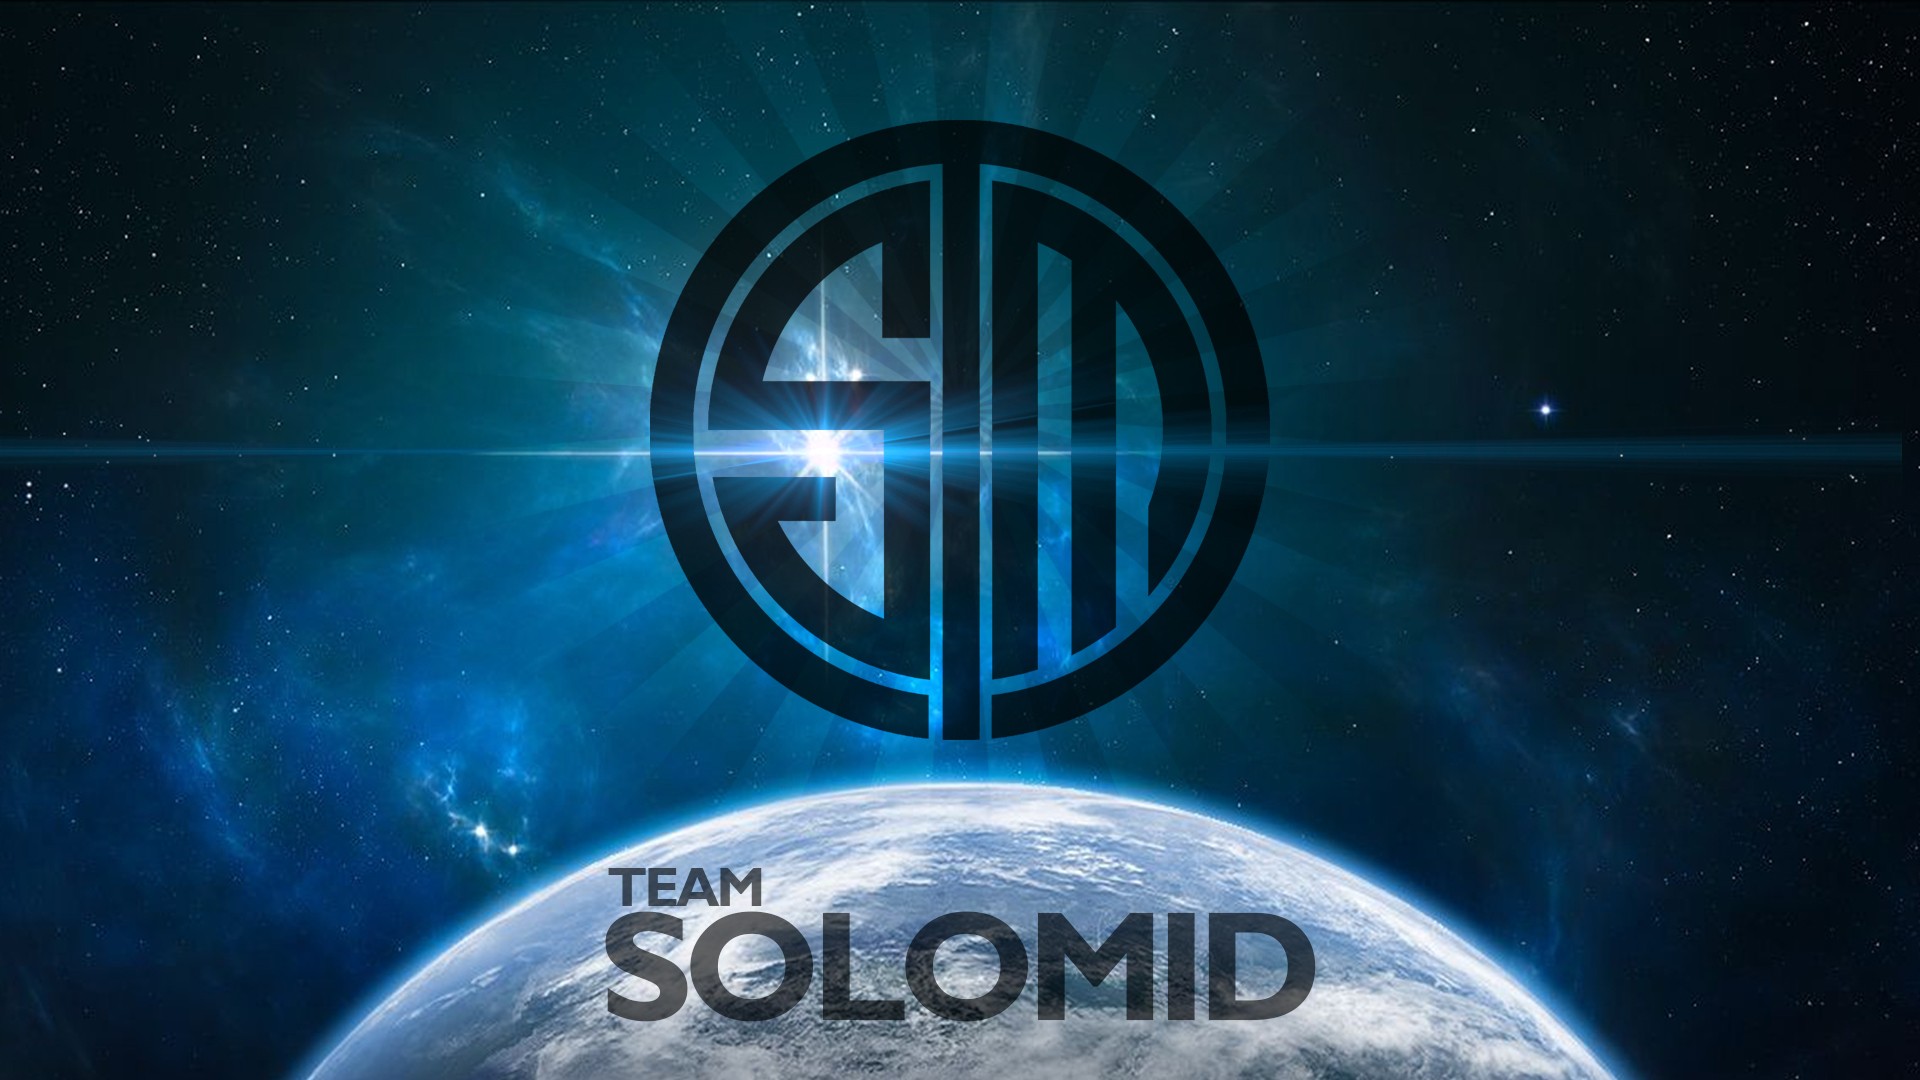 Team Solomid, League Of Legends, Esports Wallpapers HD ...